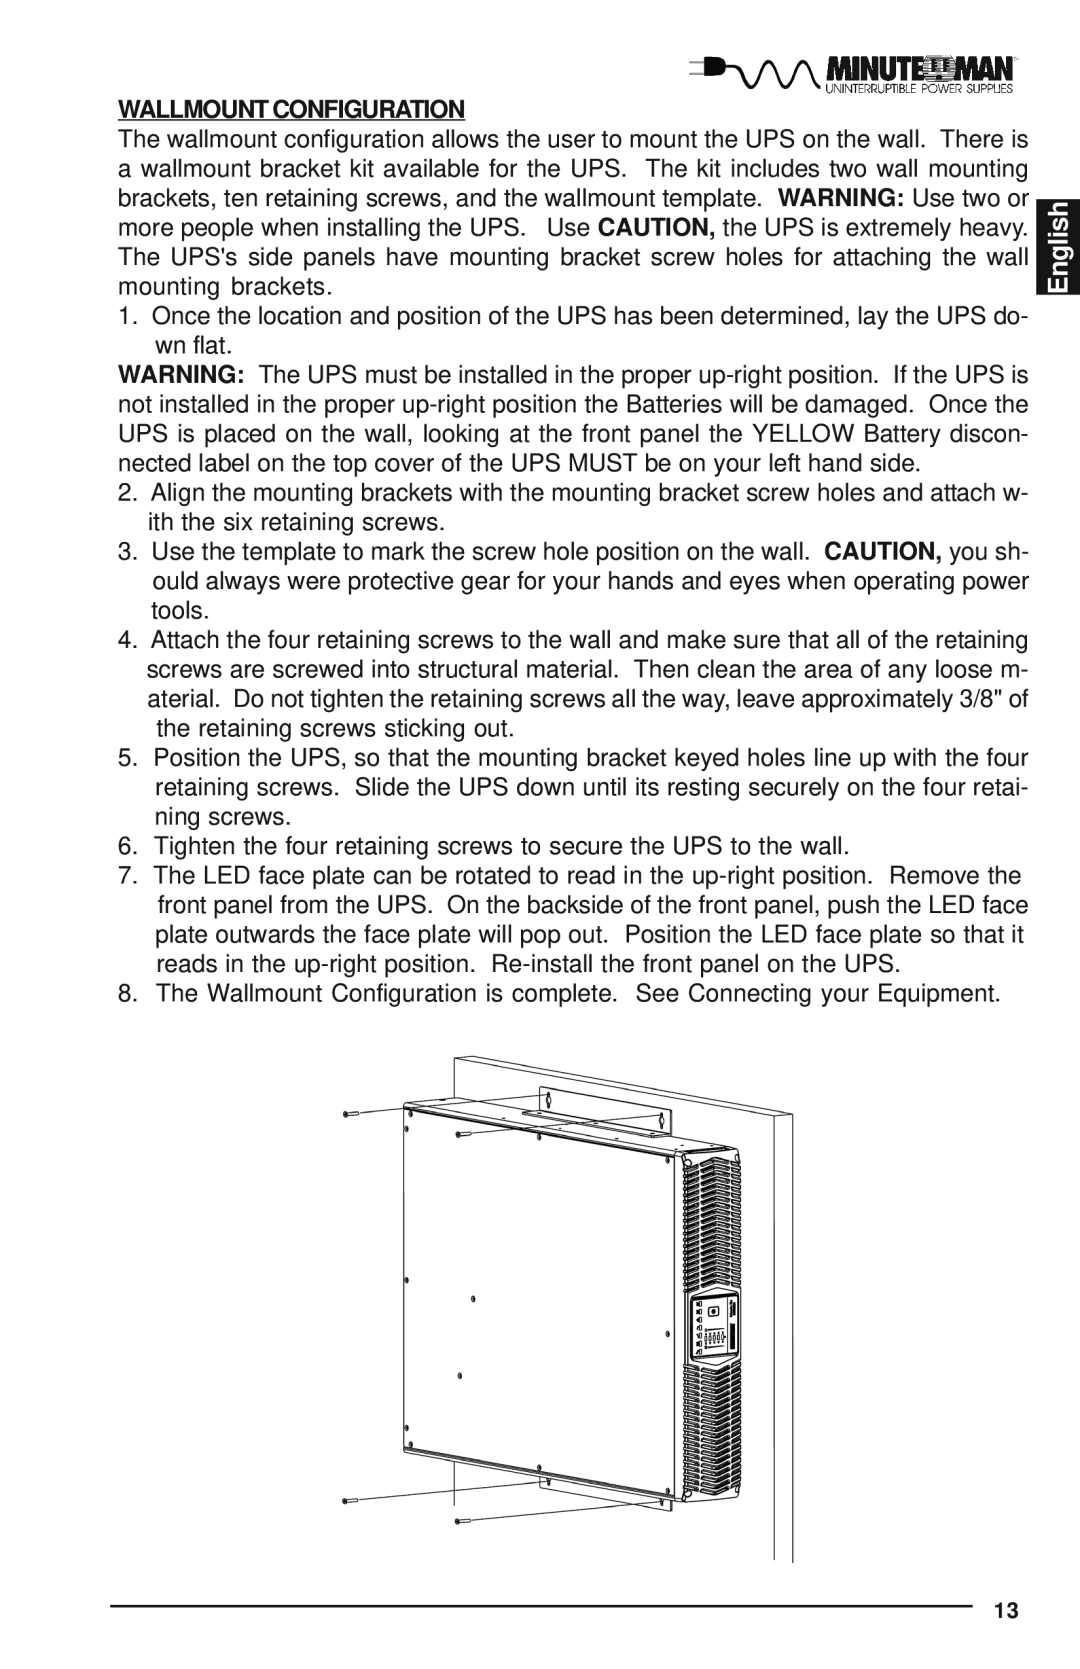 Minuteman UPS Enterprise Plus Series user manual English, Wallmount Configuration 